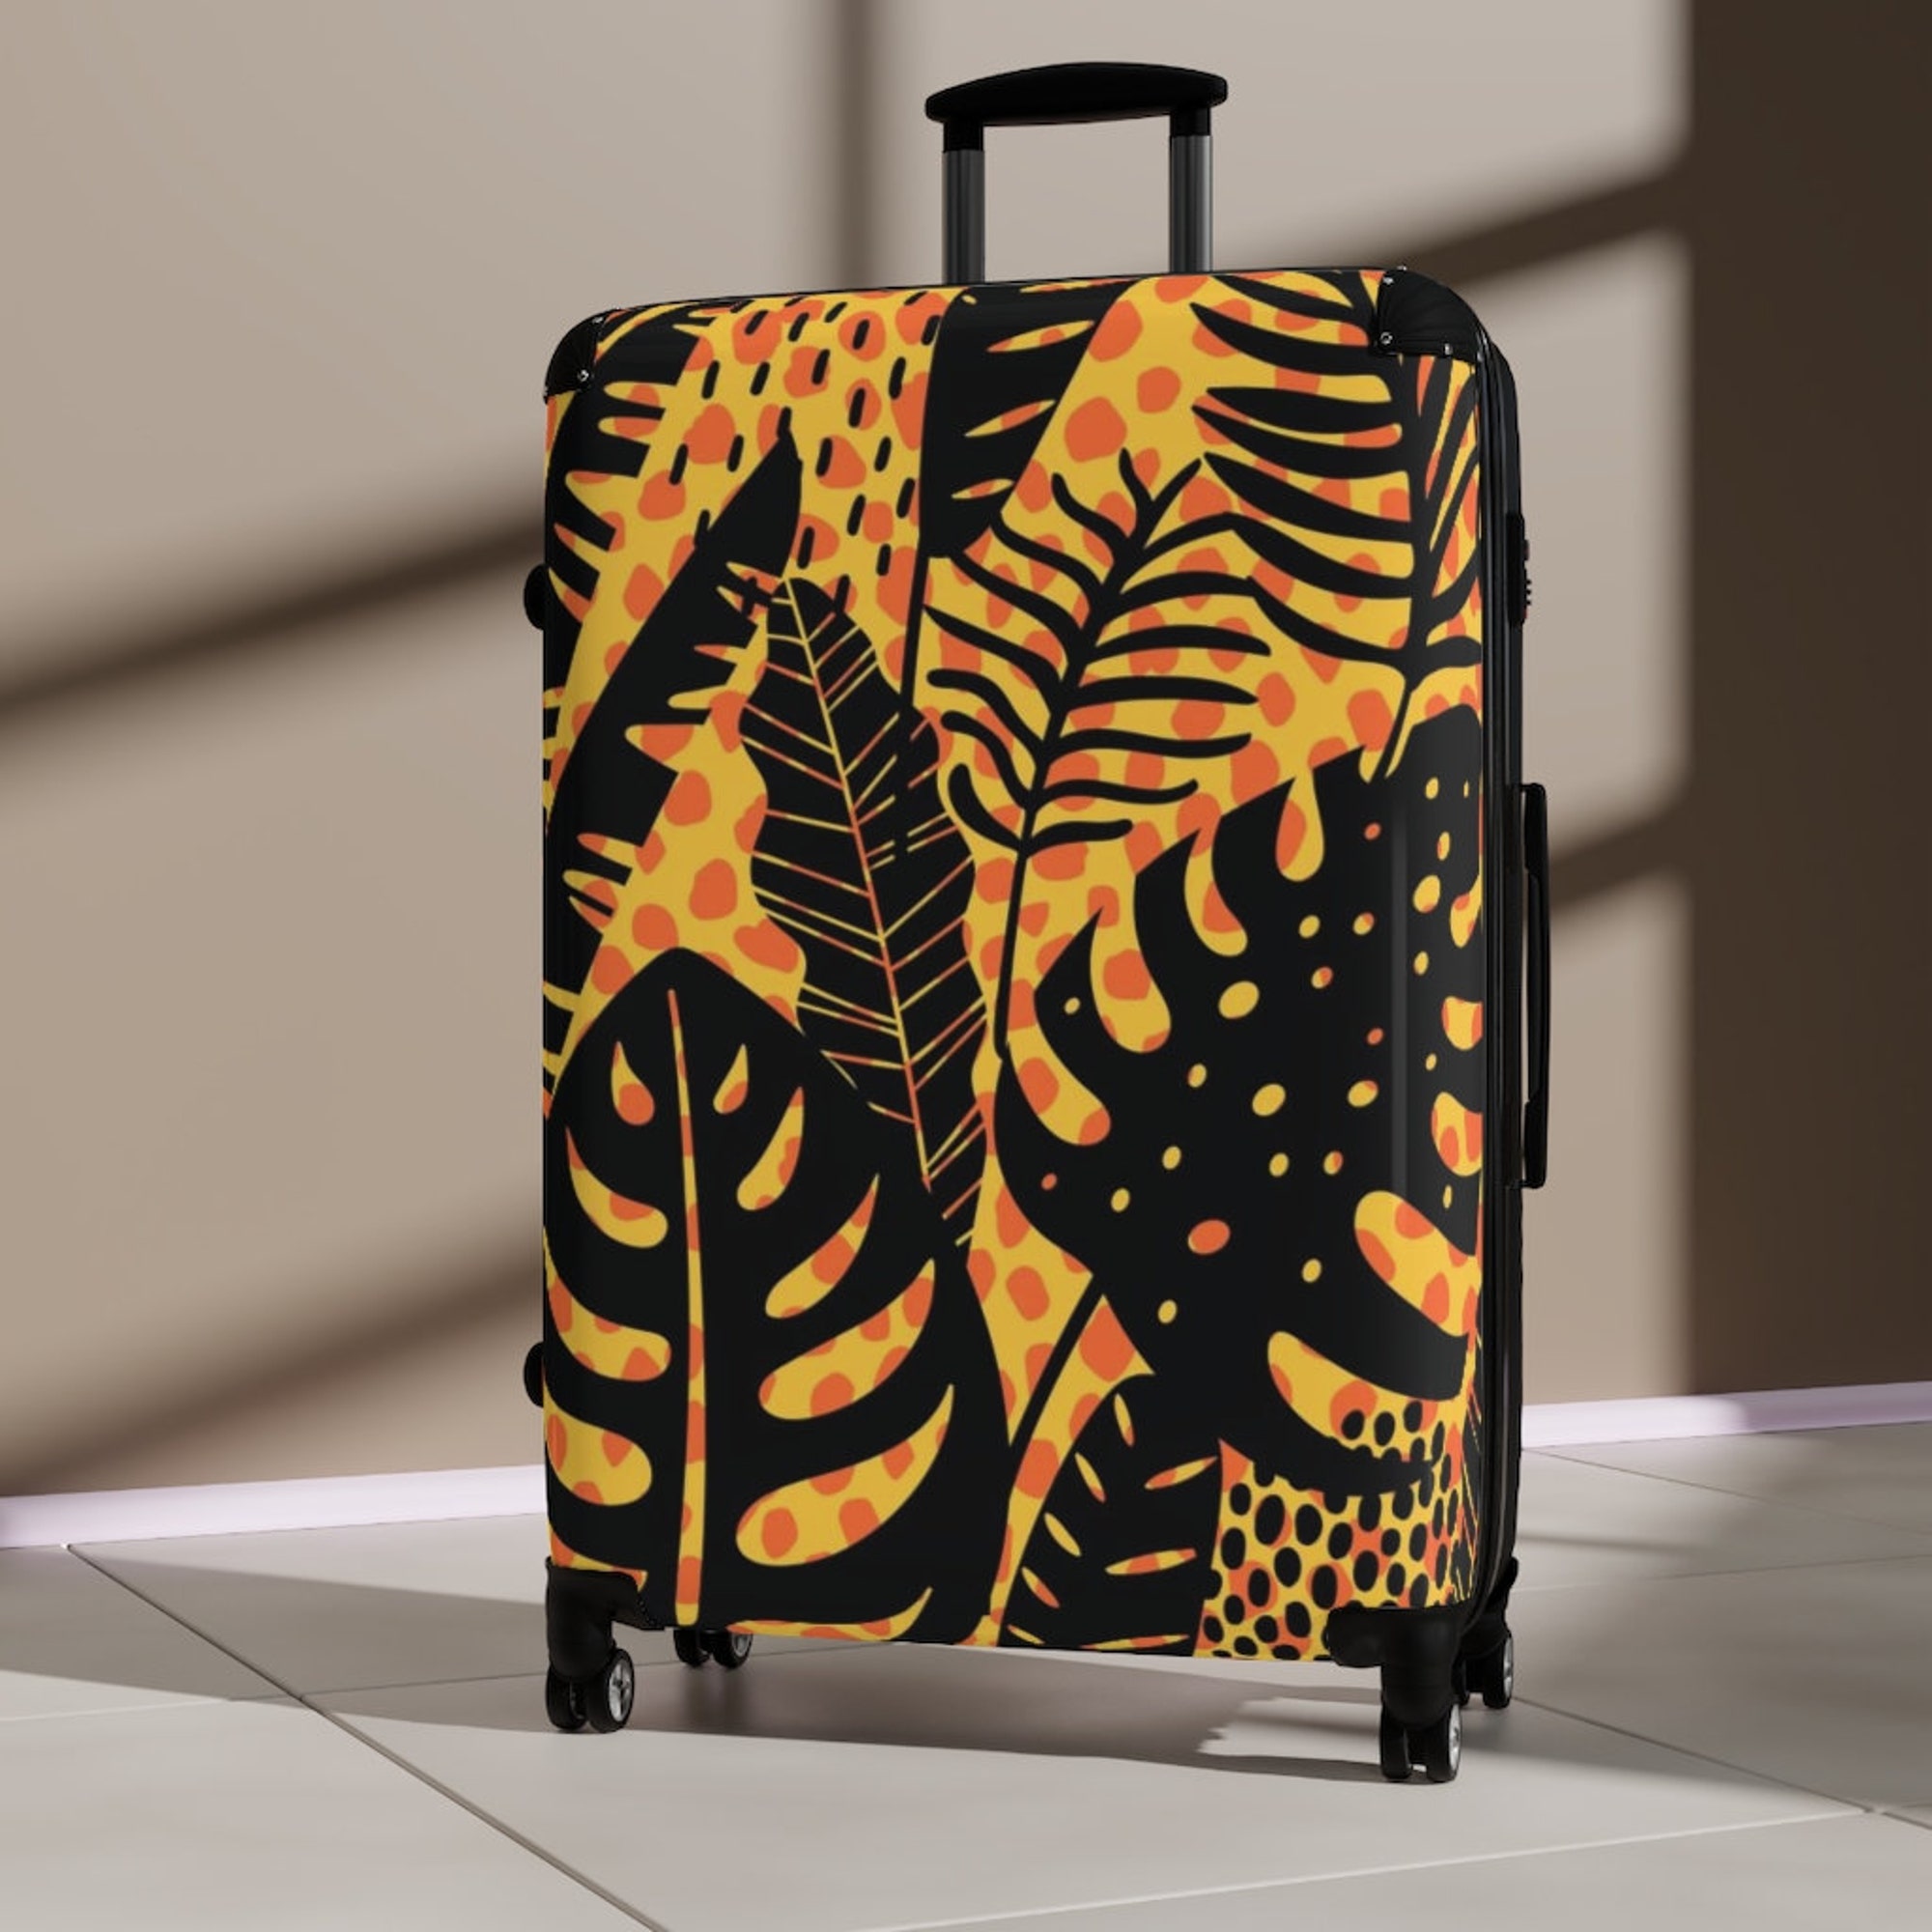 The Wild Jungle Suitcase